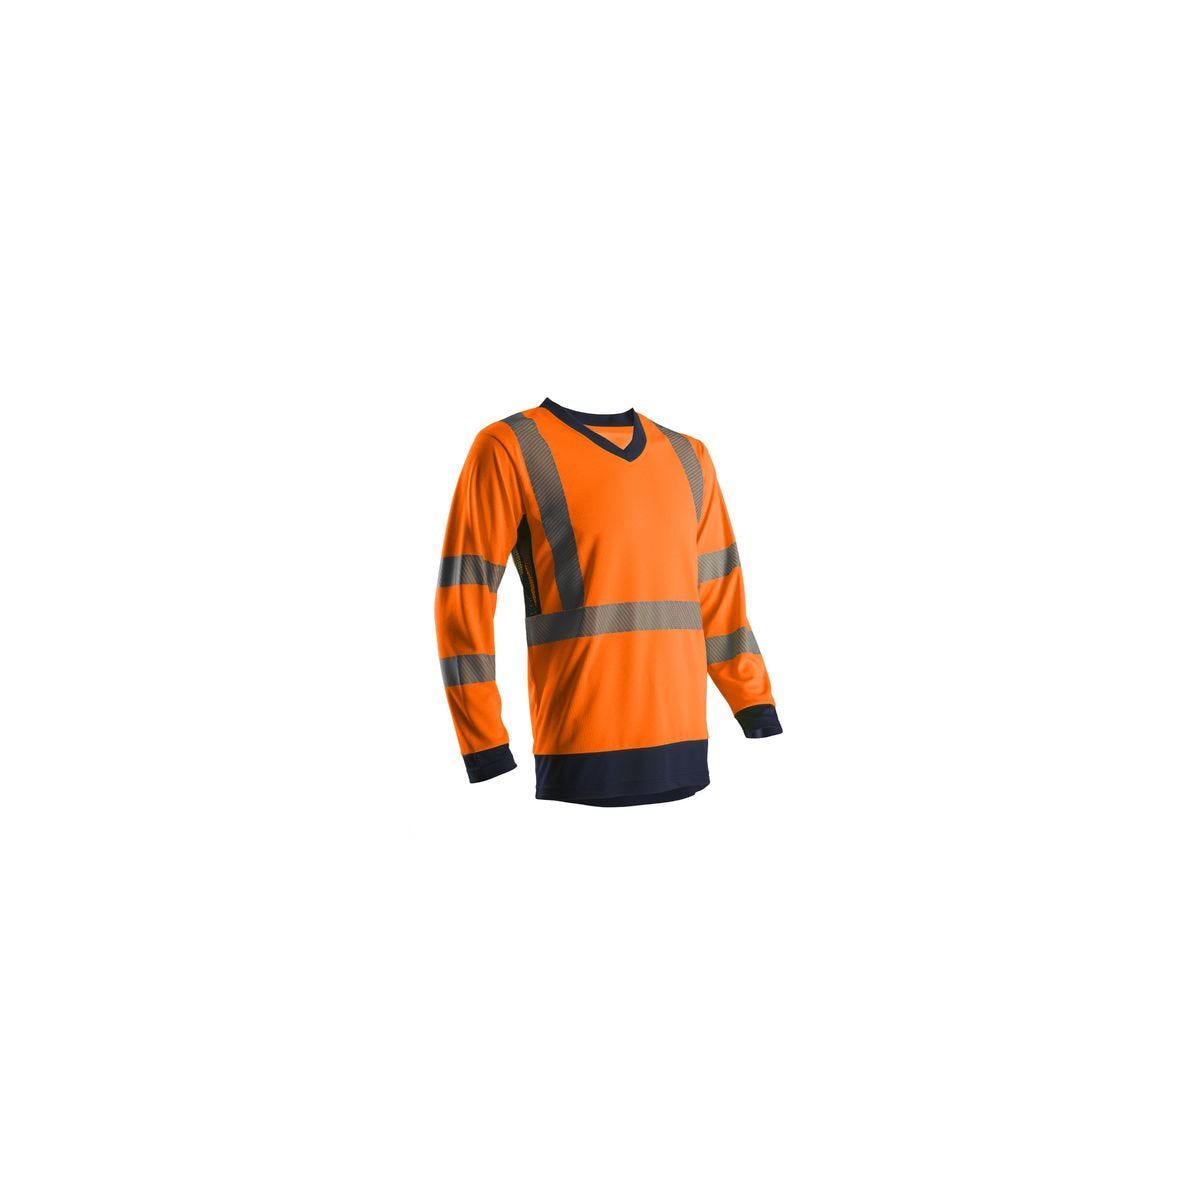 T-shirt SUNO ML orange HV/marine - COVERGUARD - Taille L 0